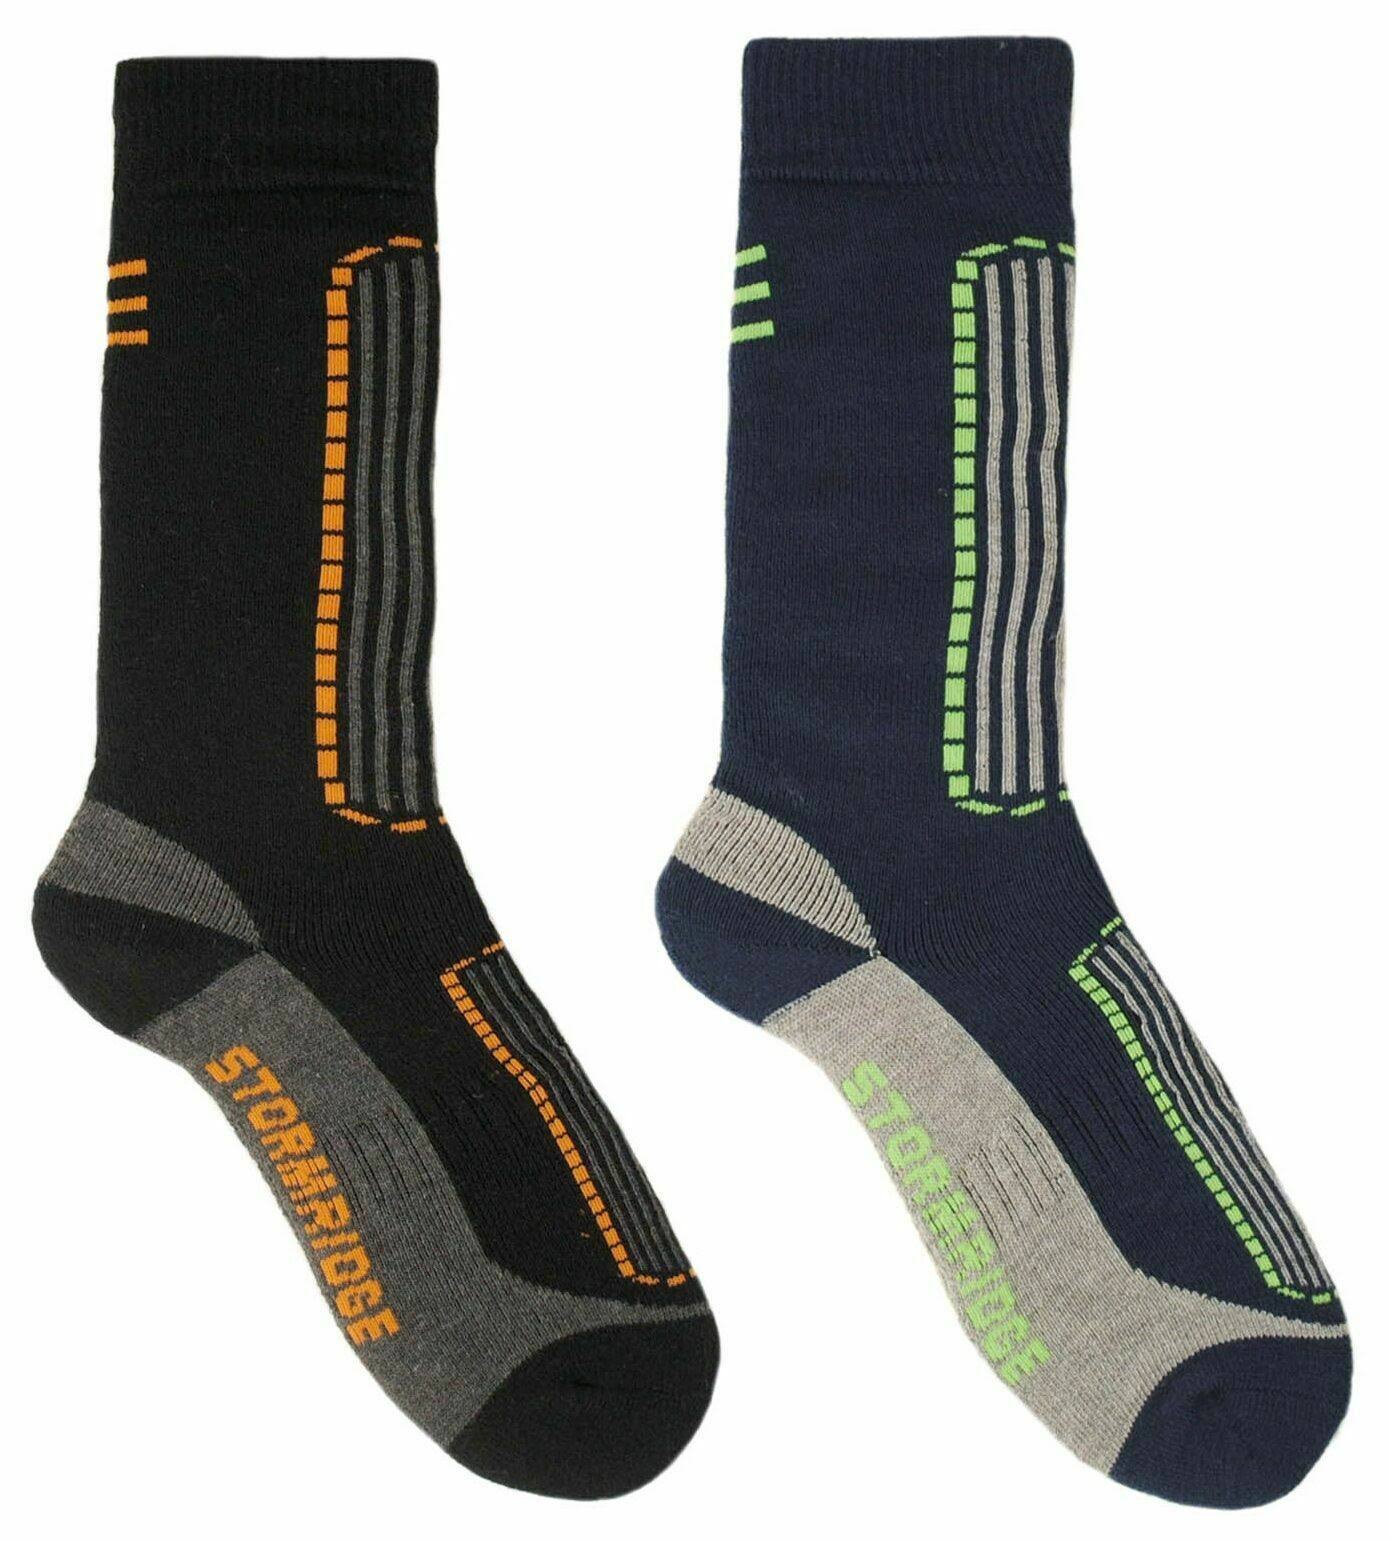 Mens Ski Socks UK 7-11 Black & Blue Storm Ridge Socks Pack of 2